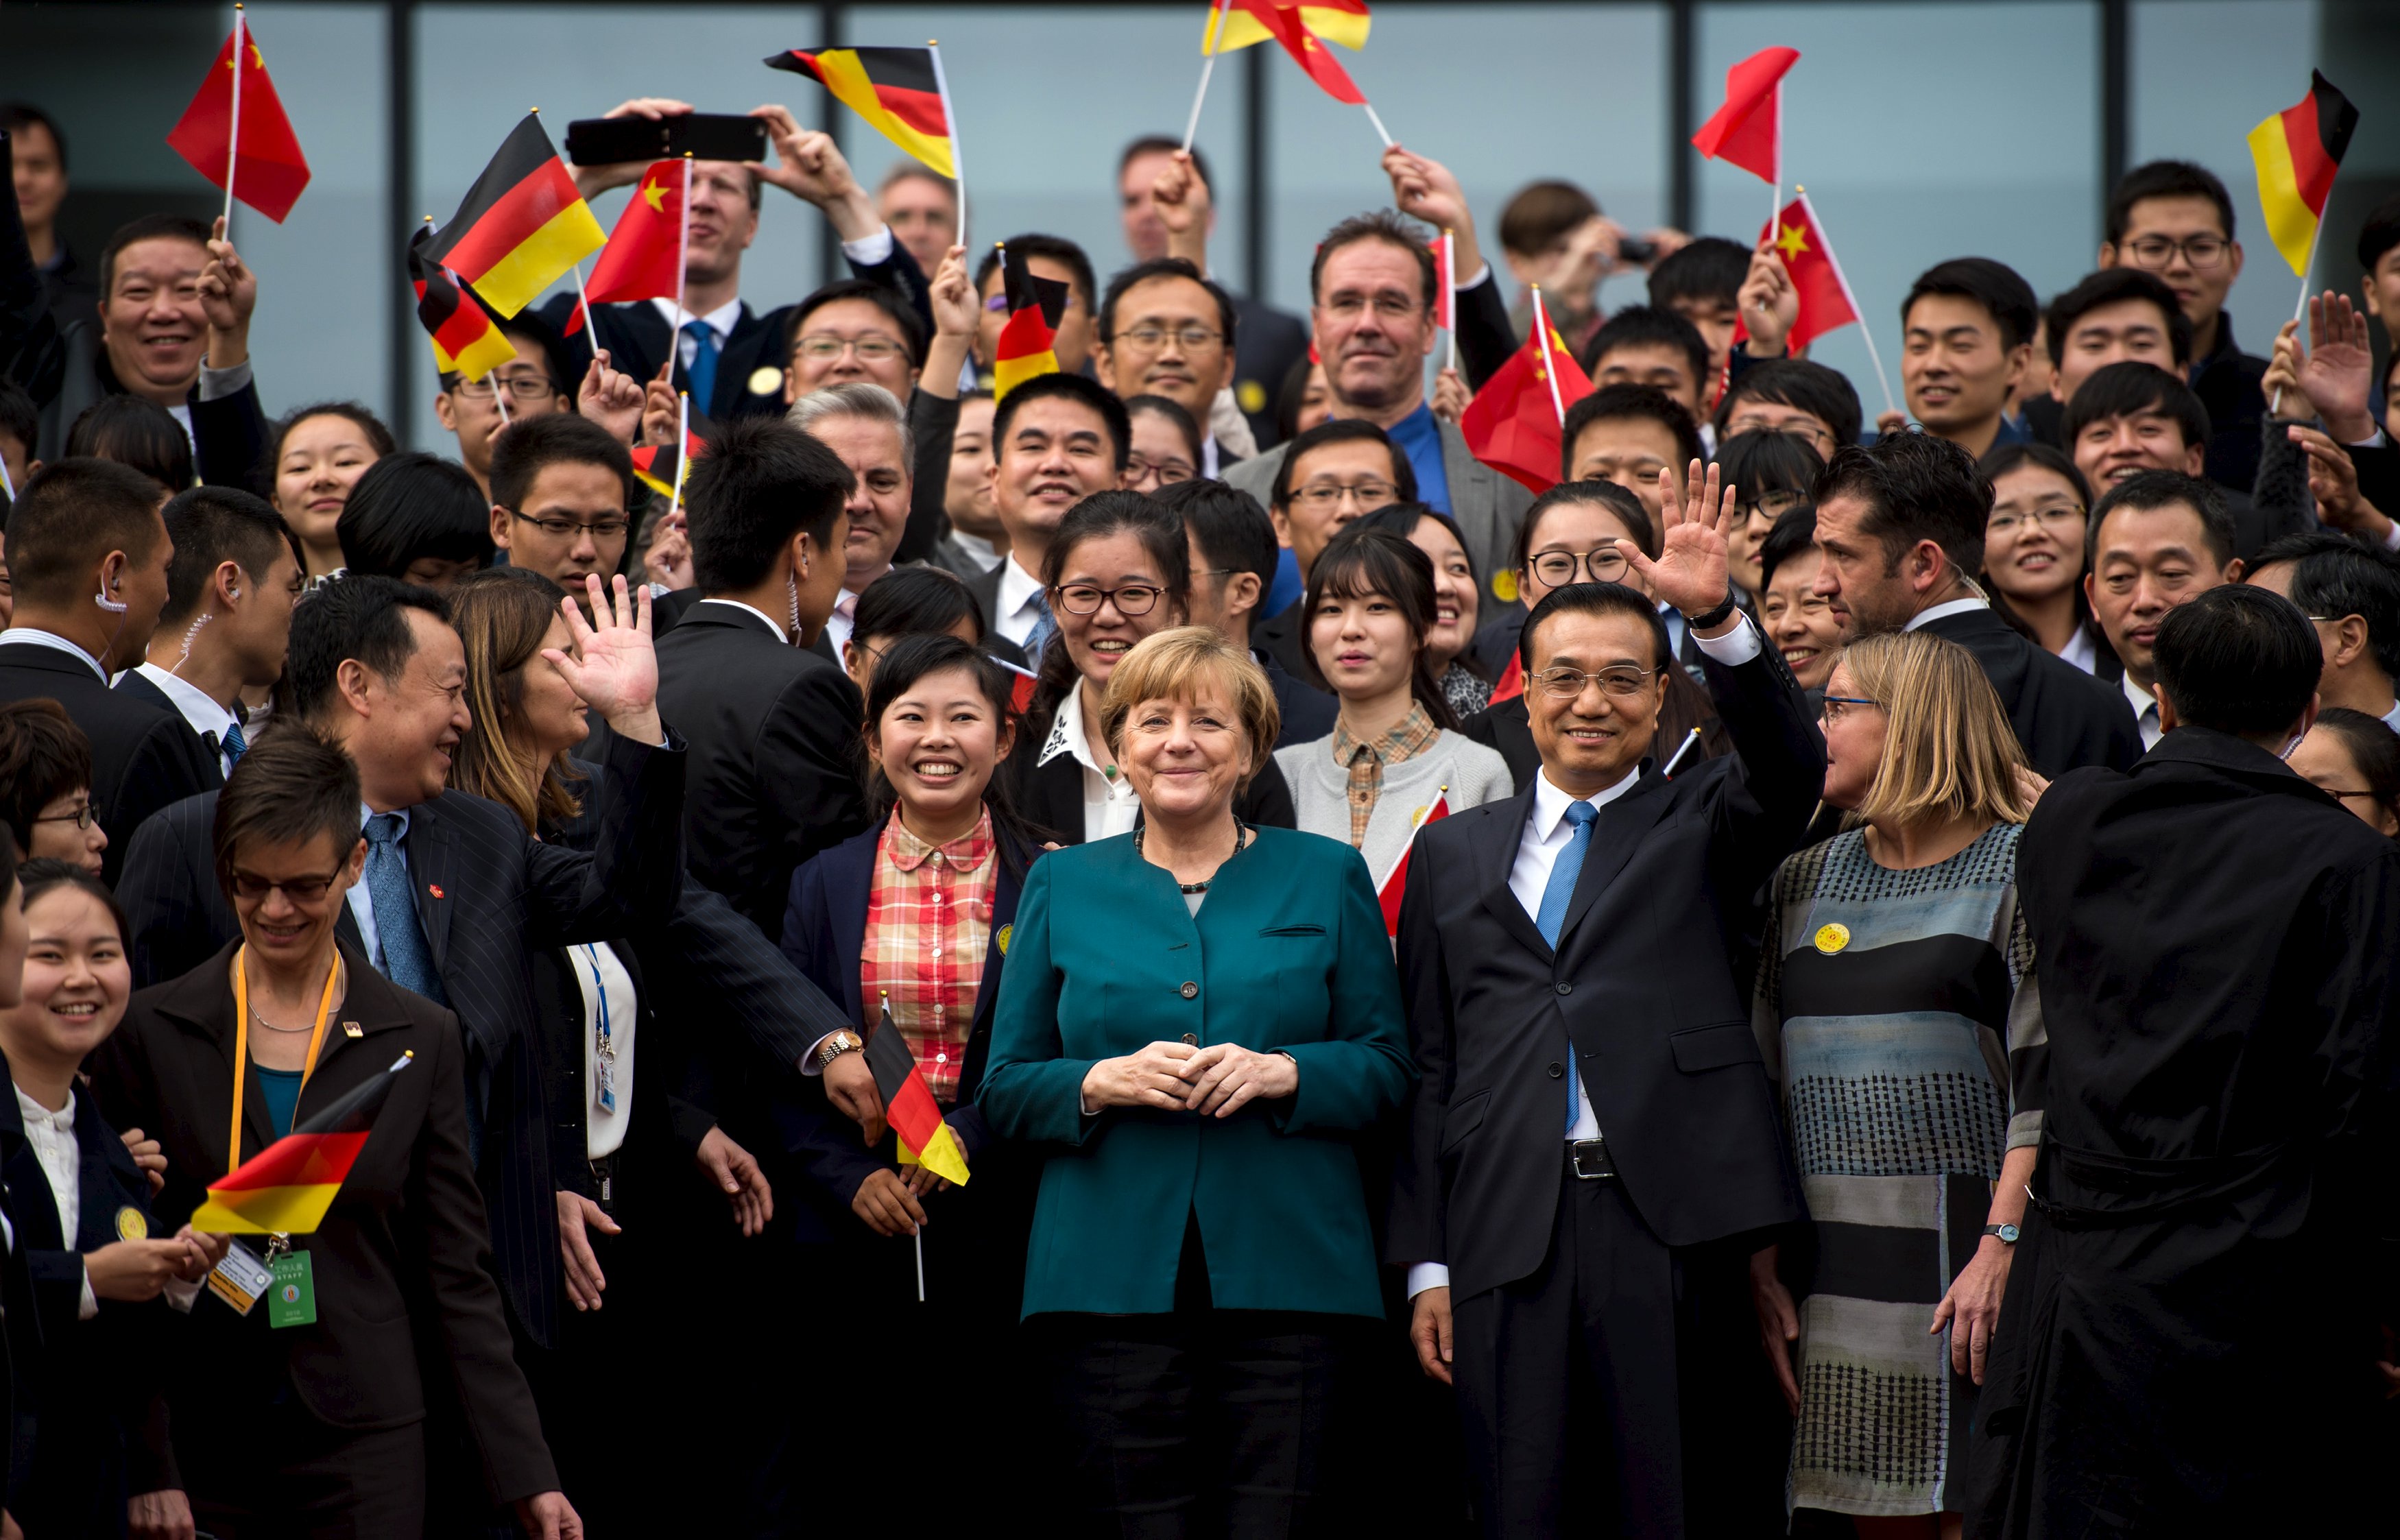 Kanselir Jerman Angela Merkel (tengah) dan Perdana Menteri Li Keqiang (ketiga kanan) berfoto dengan mahasiswa setelah kunjungan mereka ke Universitas Jerman di Hefei, Jumat (30/10). REUTERS/JOHANNES EISELE.